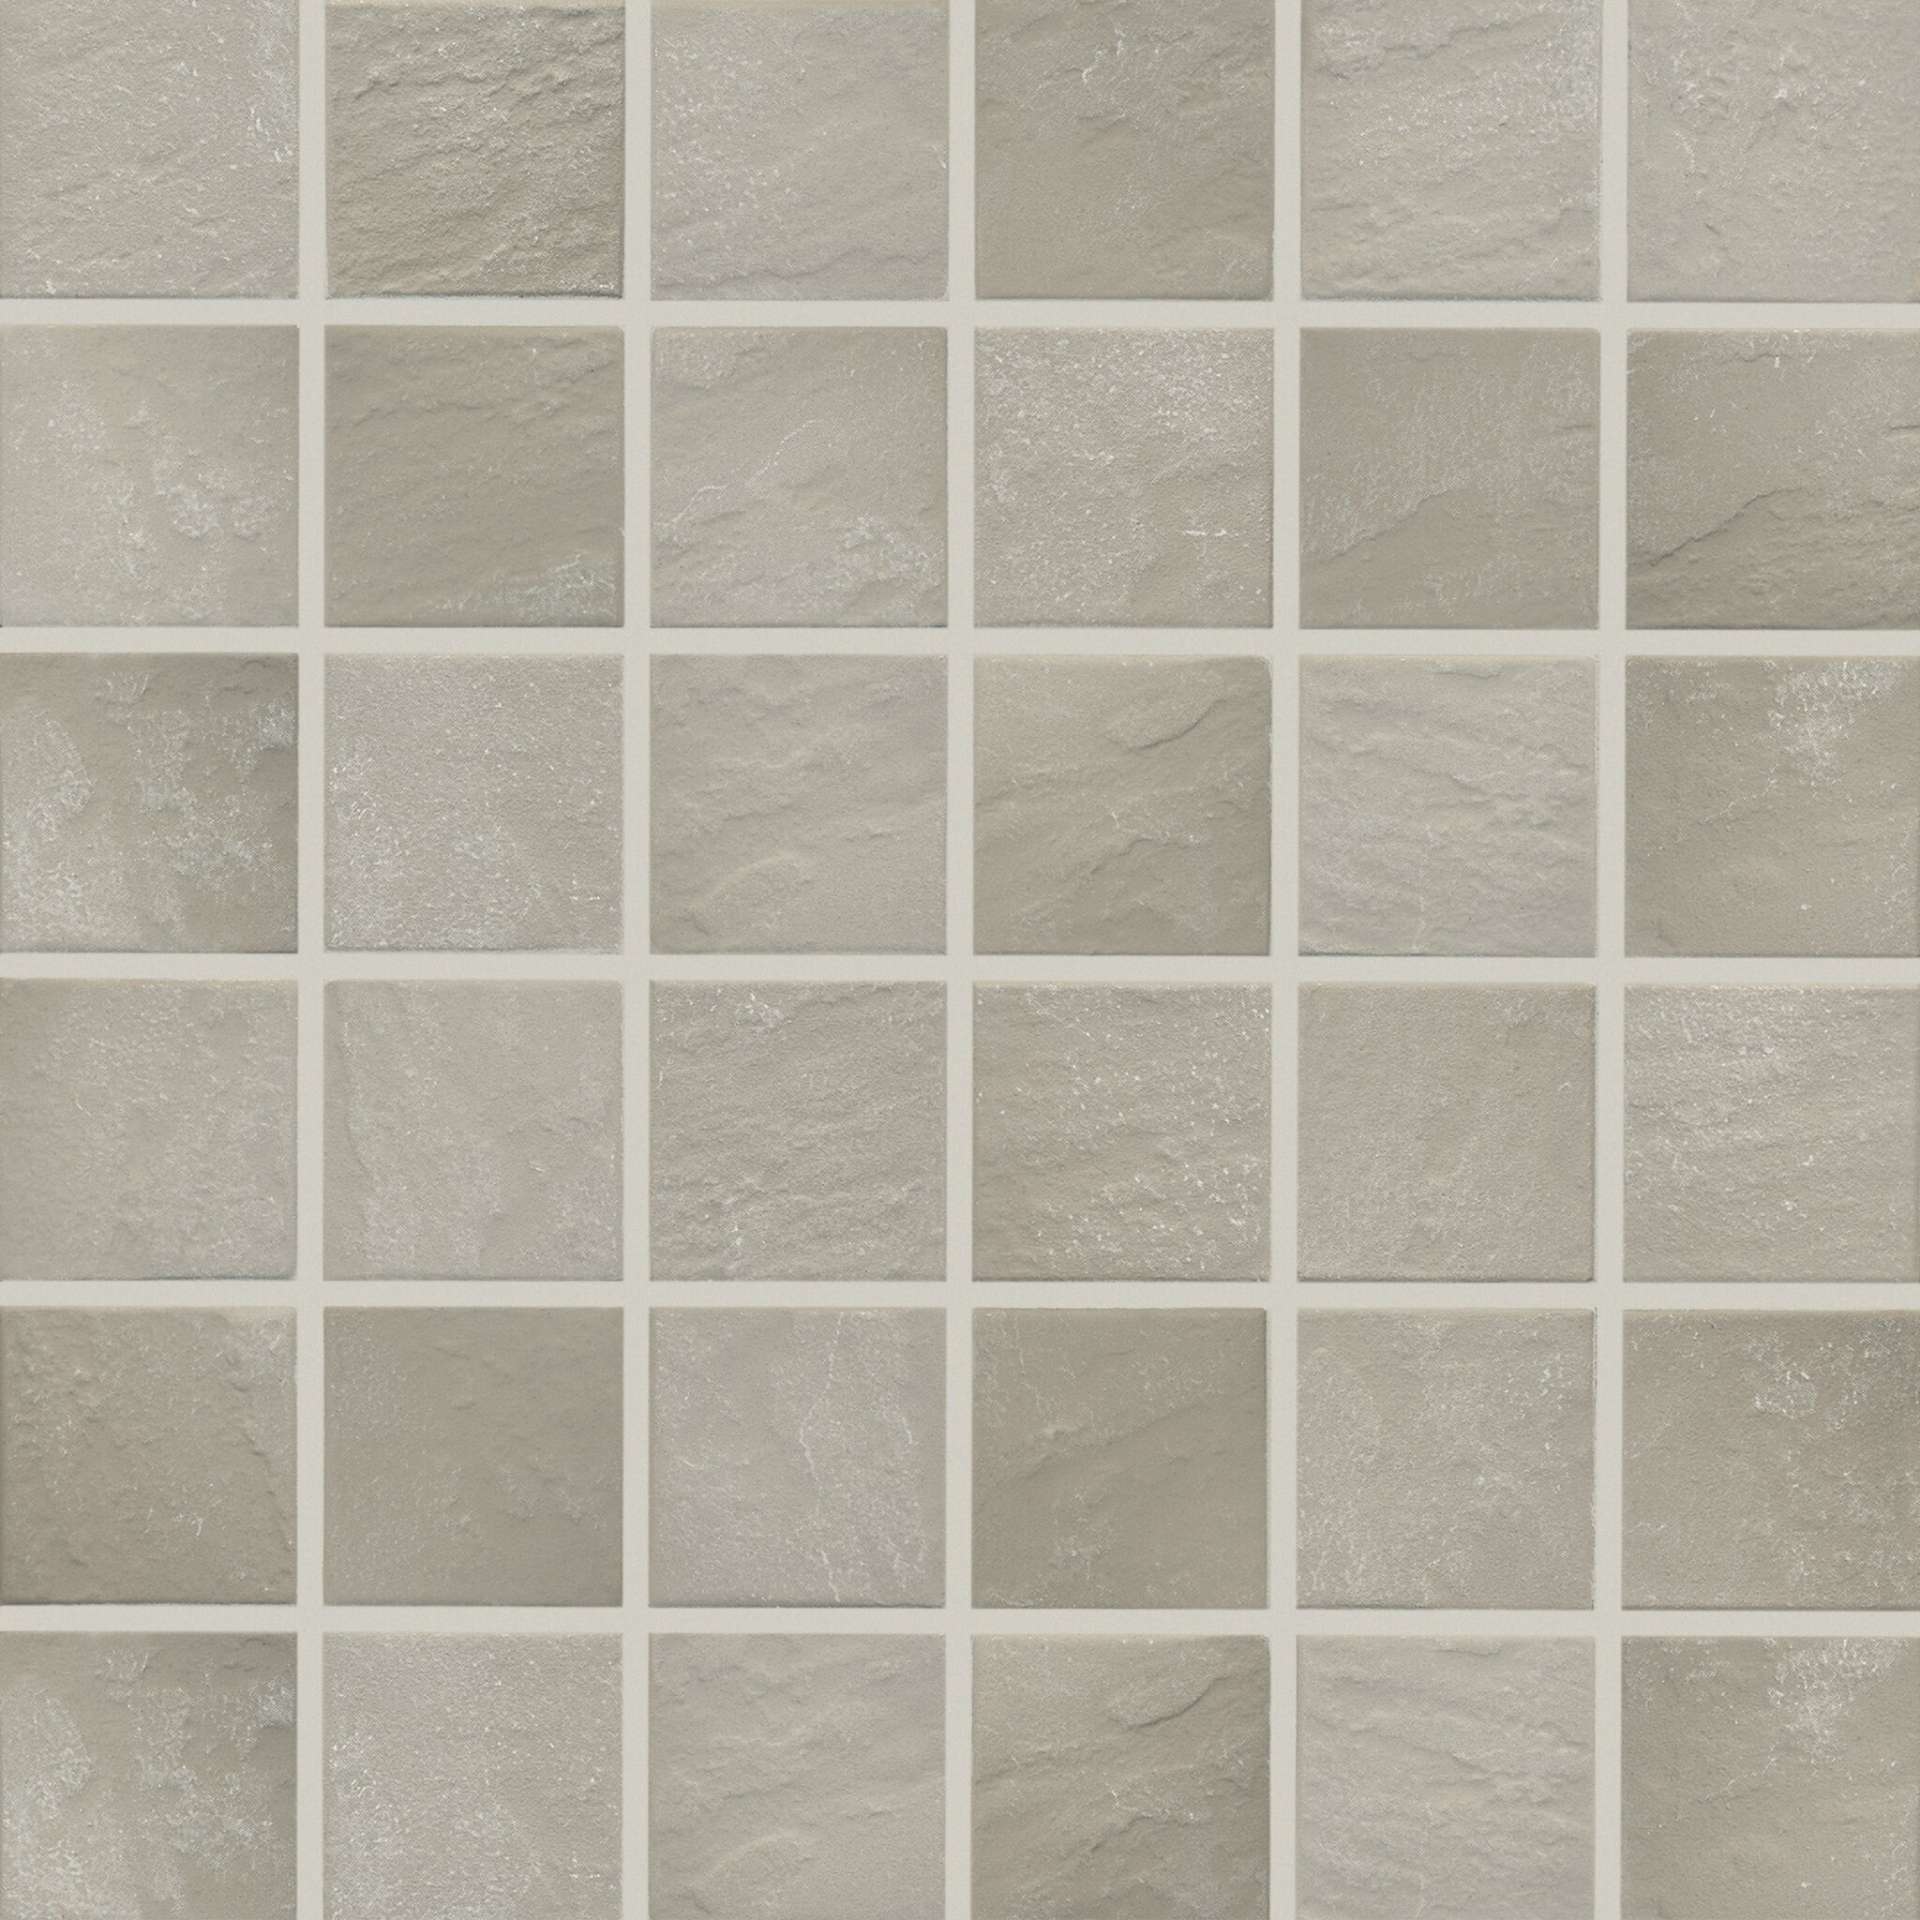 Мозаика Jasba Basic Stone Hellgrau 42202H-73, цвет серый, поверхность противоскользящая, квадрат, 297x297